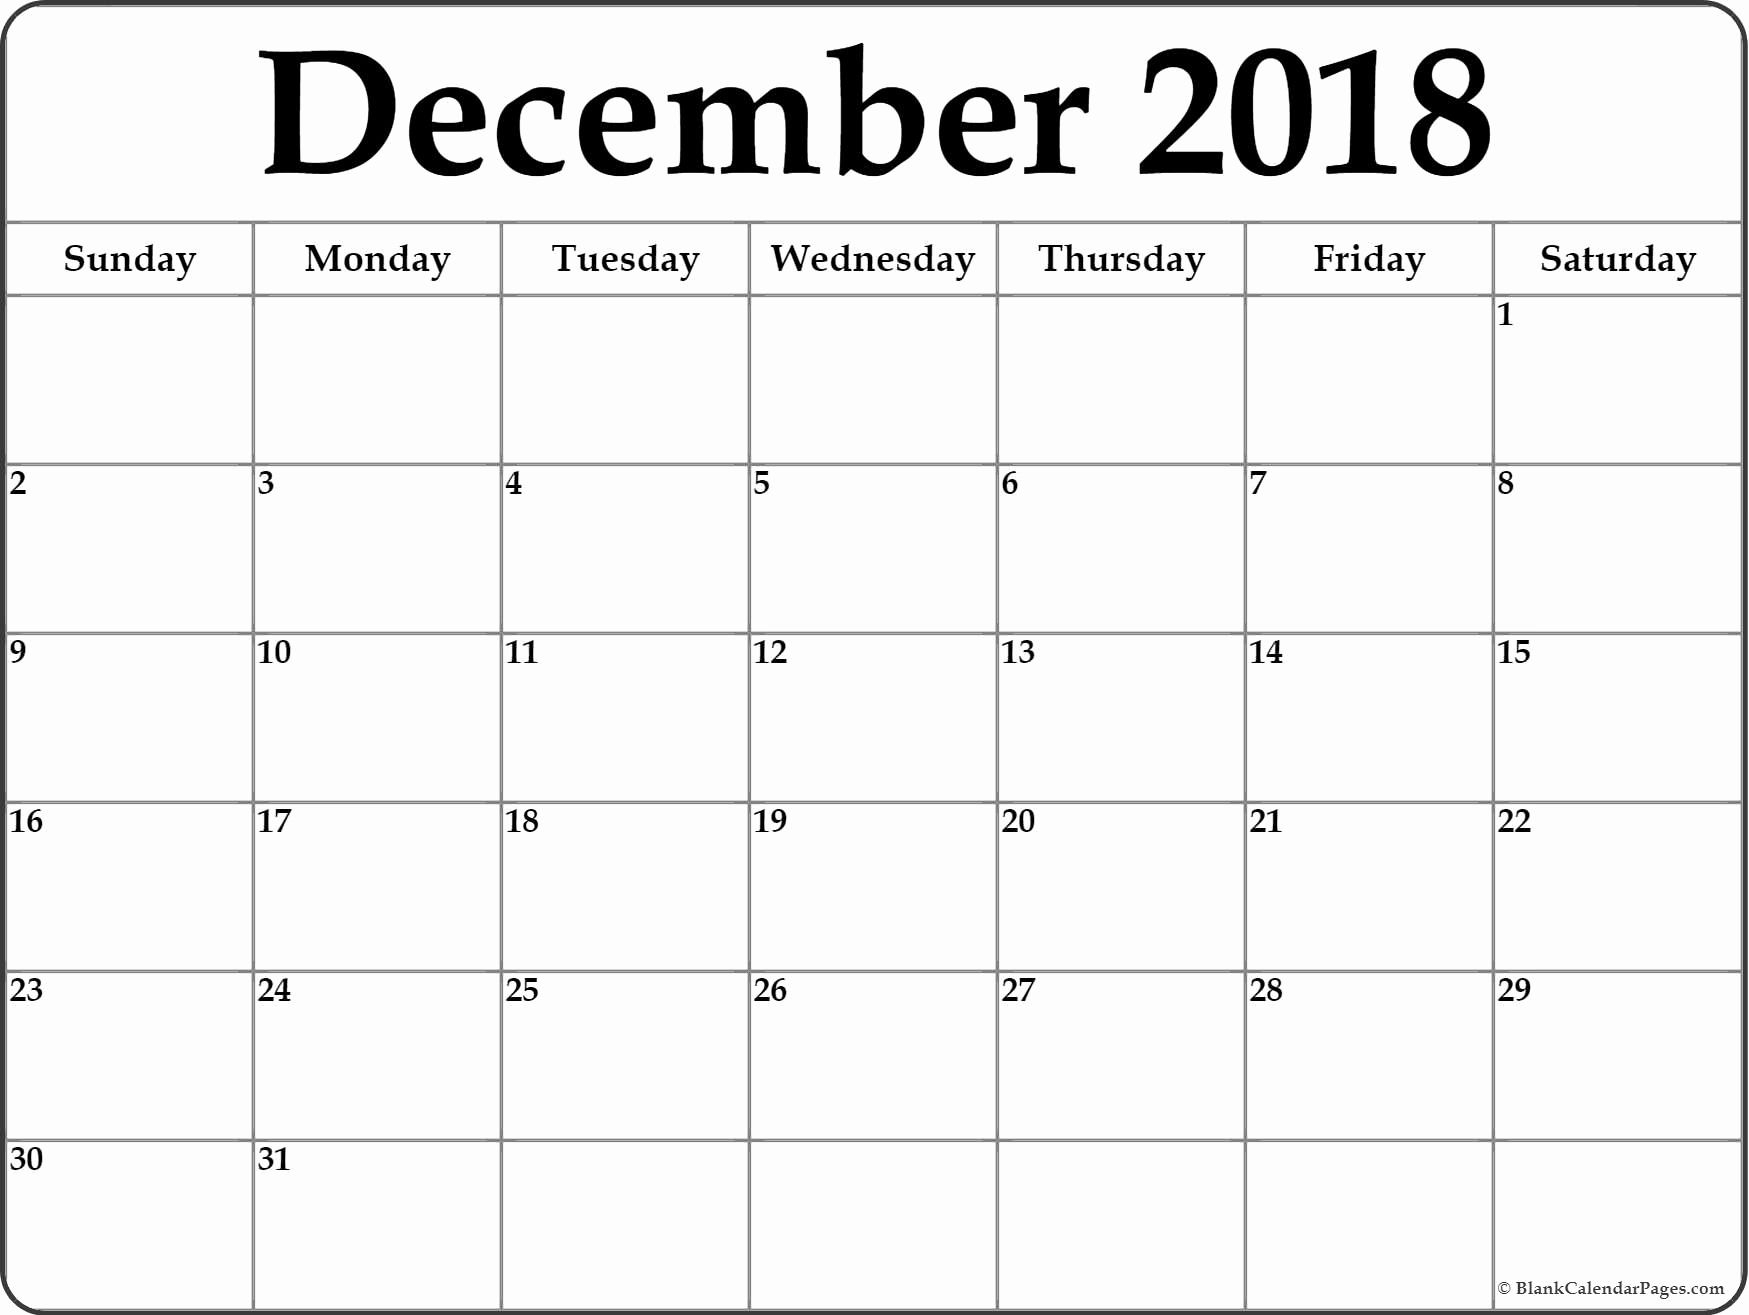 Calendar December 2018 And January 2019 | December 2018 Calendar inside Blank Calendar For November And December